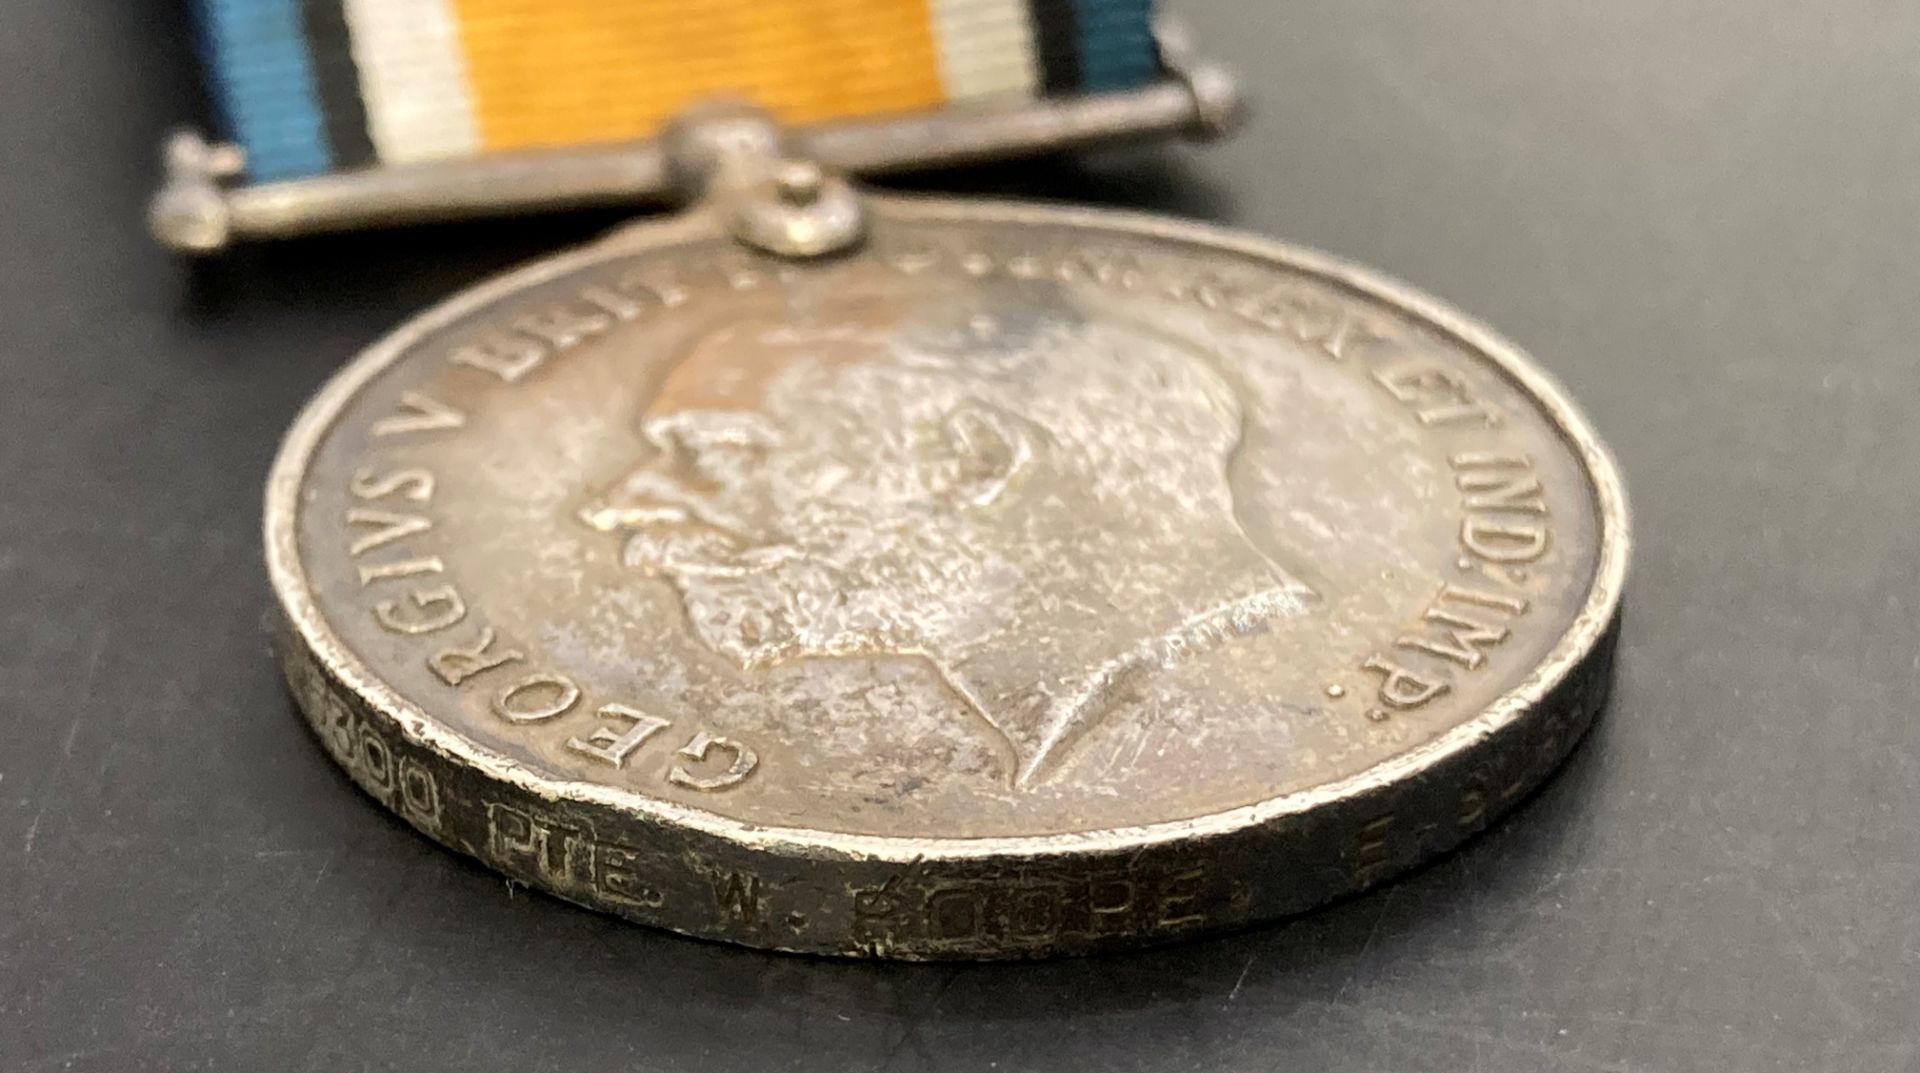 Three First World War medals - 1914-1915 Star, - Image 3 of 5